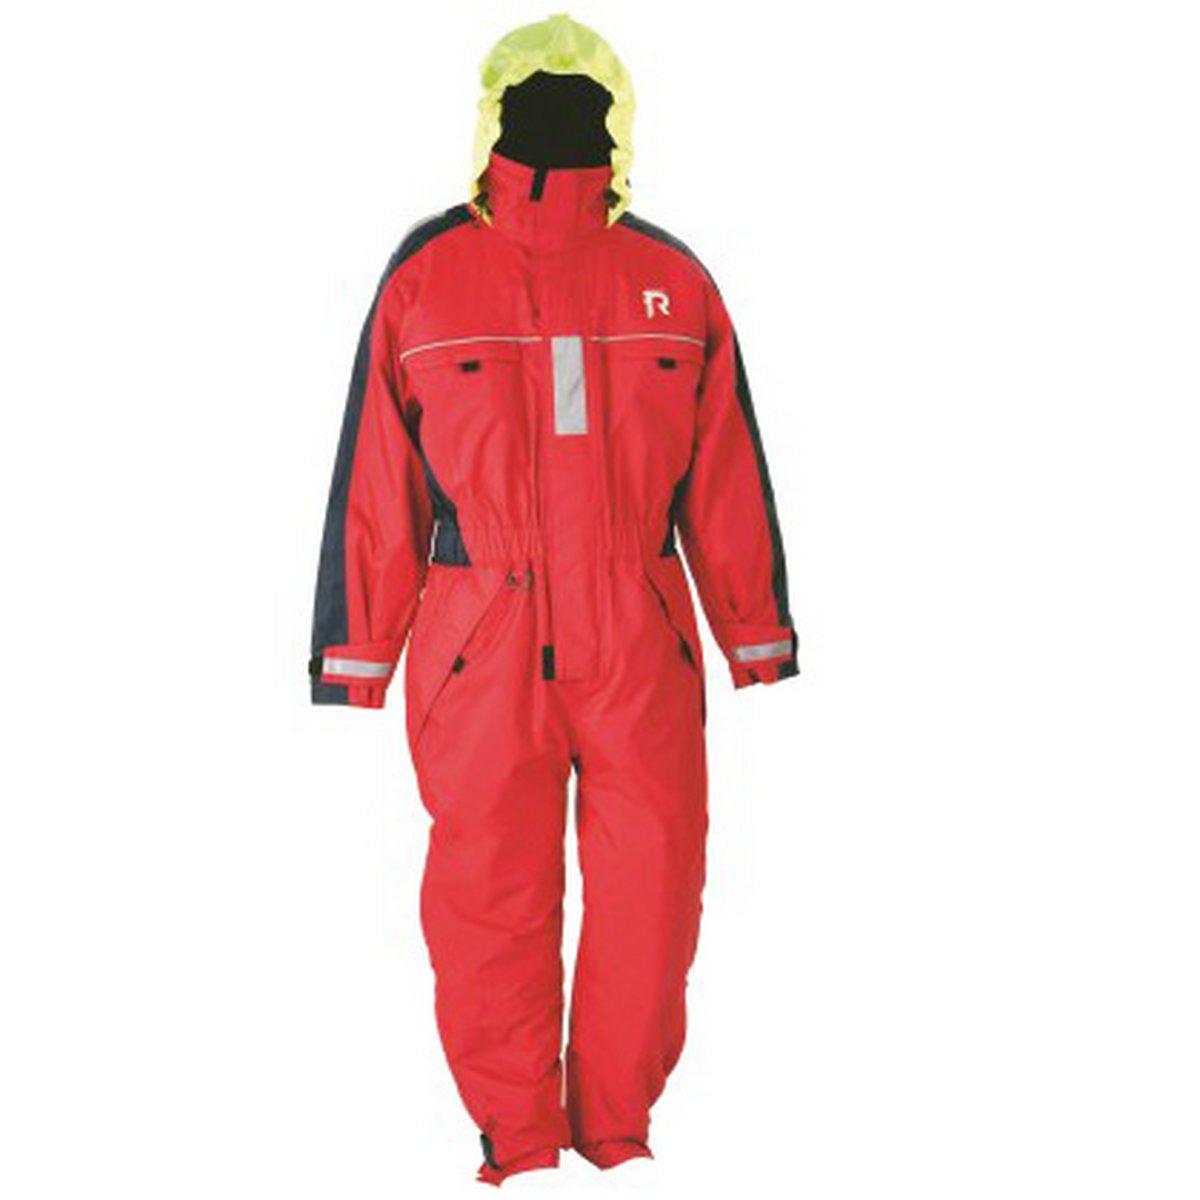 Regatta Coastline 953 Fishermen Flotation Suit - Red/Yellow FR 957-0-3280 (SS7)